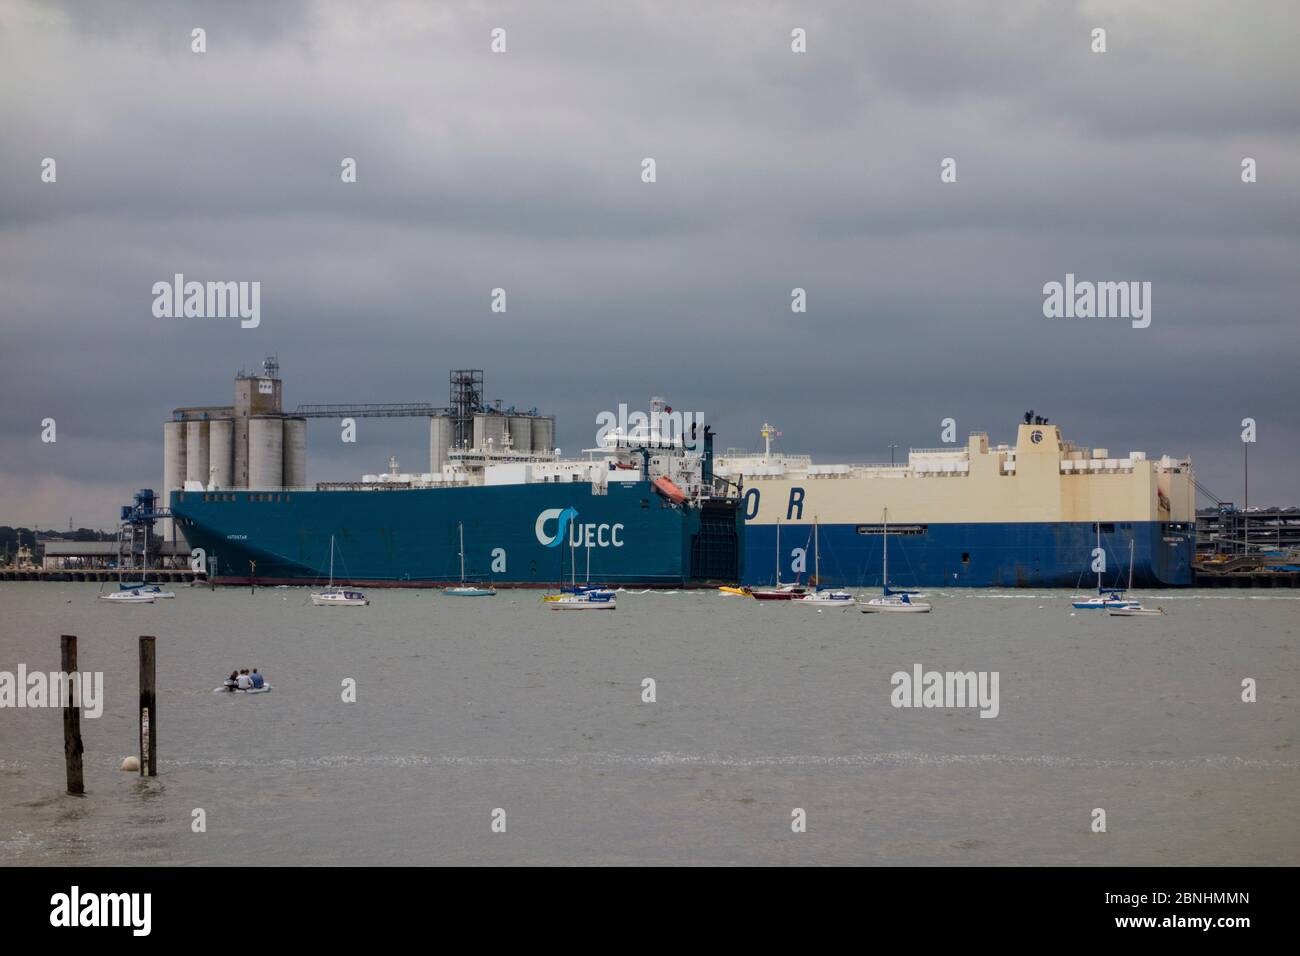 UECC Shipping Company Vessel  on River Itchen, Southampton, Hampshire, UK Stock Photo